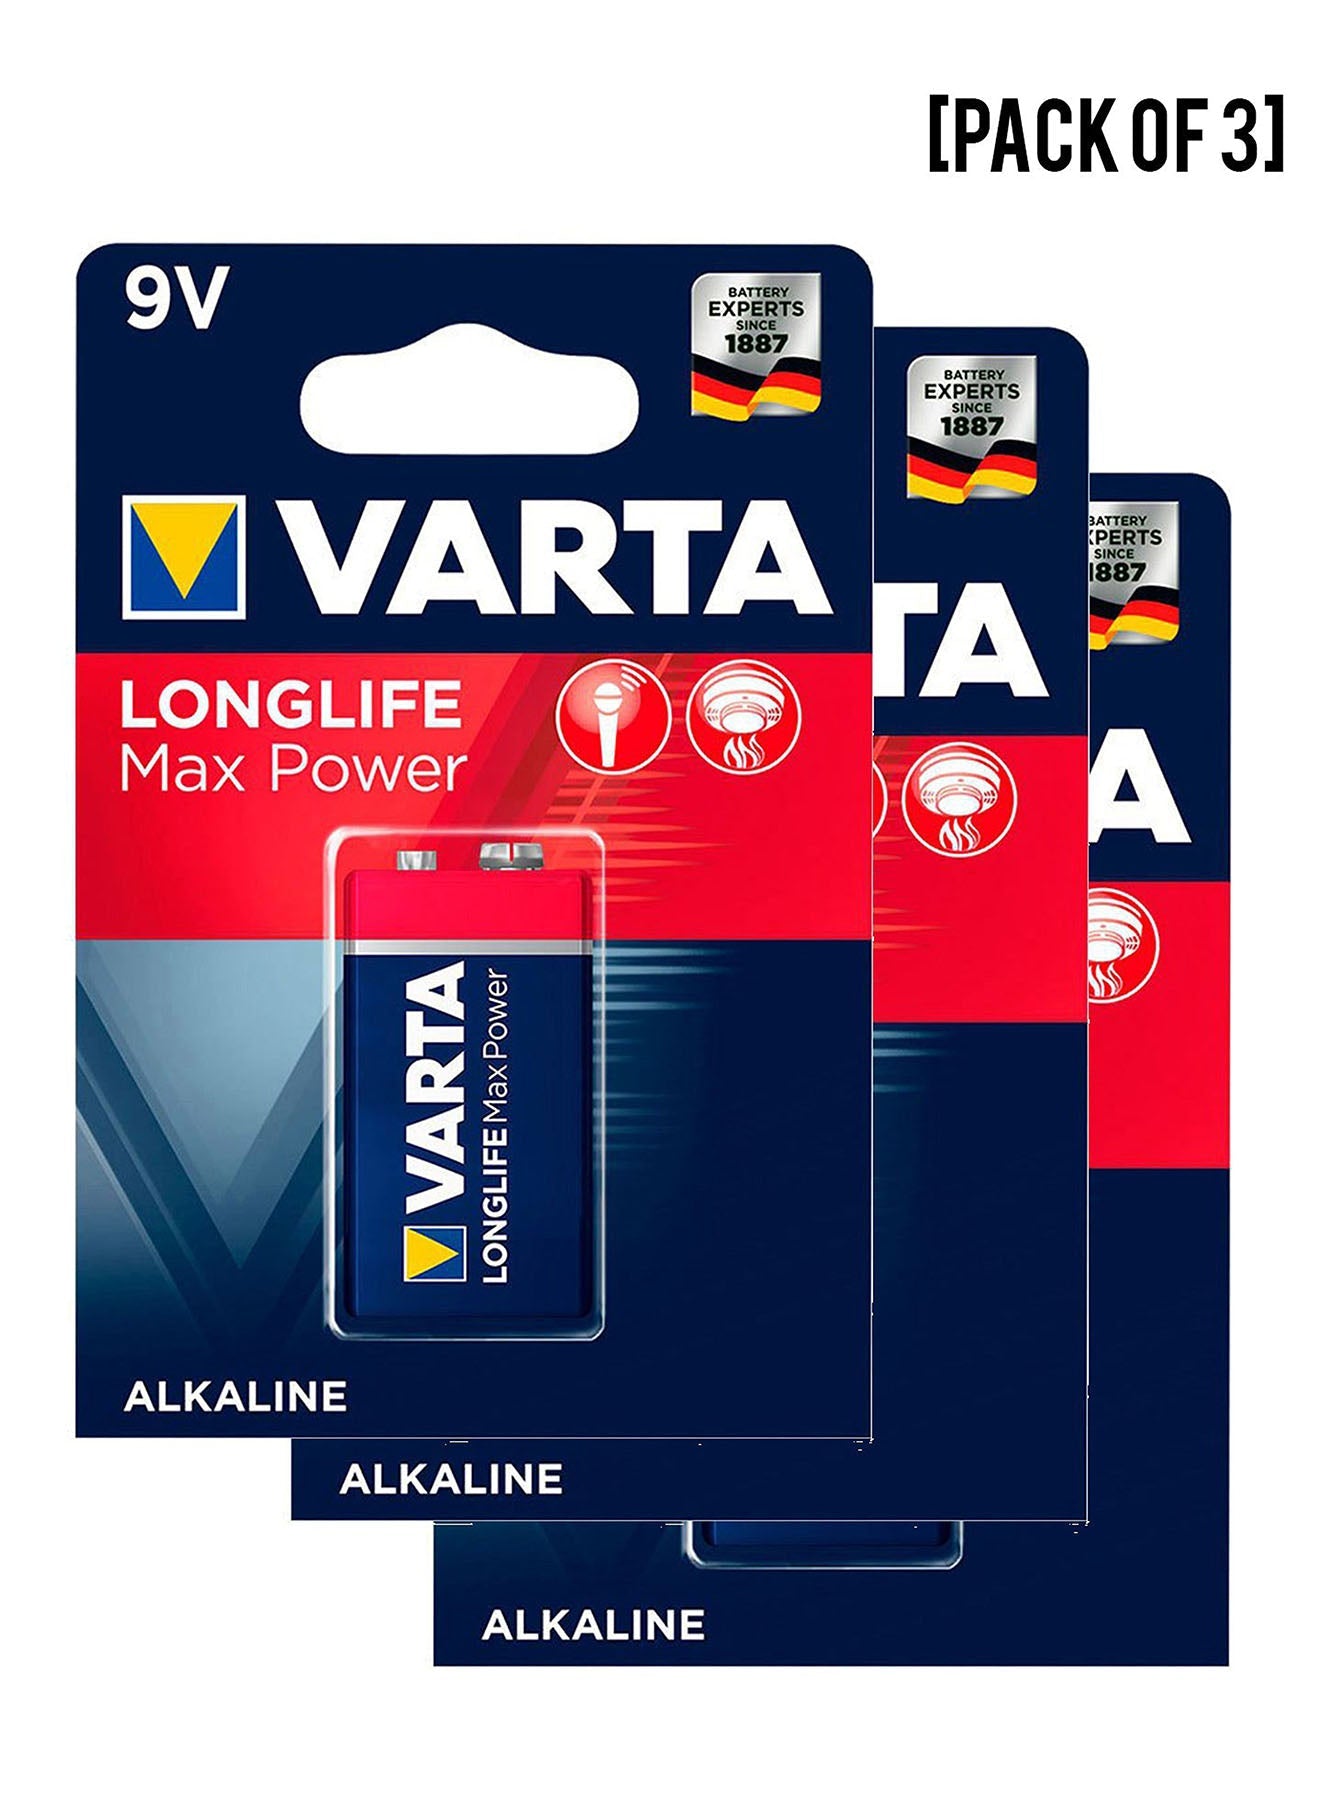 Varta Long Life Max Power 9V Alkaline Battery Value Pack of 3 